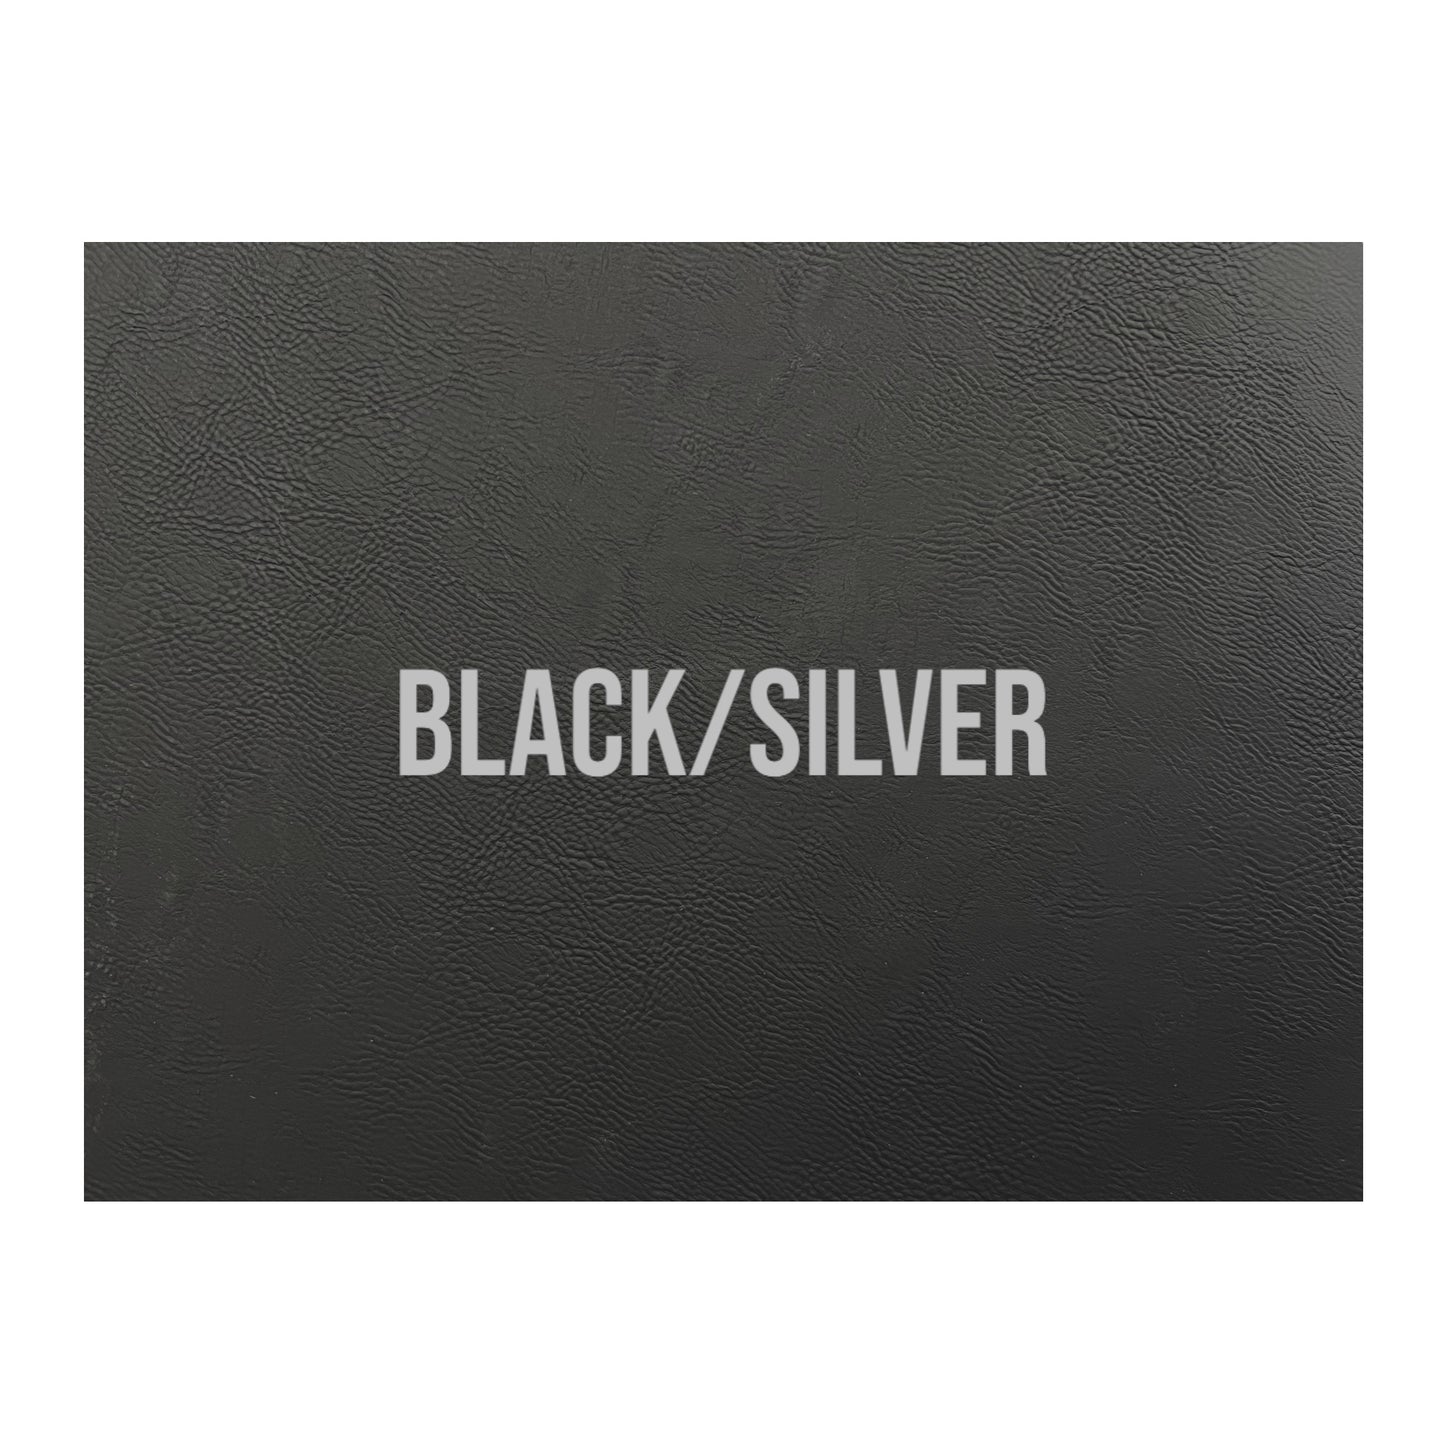 BLACK/SILVER HYDBOND’D LEATHERETTE SHEET (12"x24")